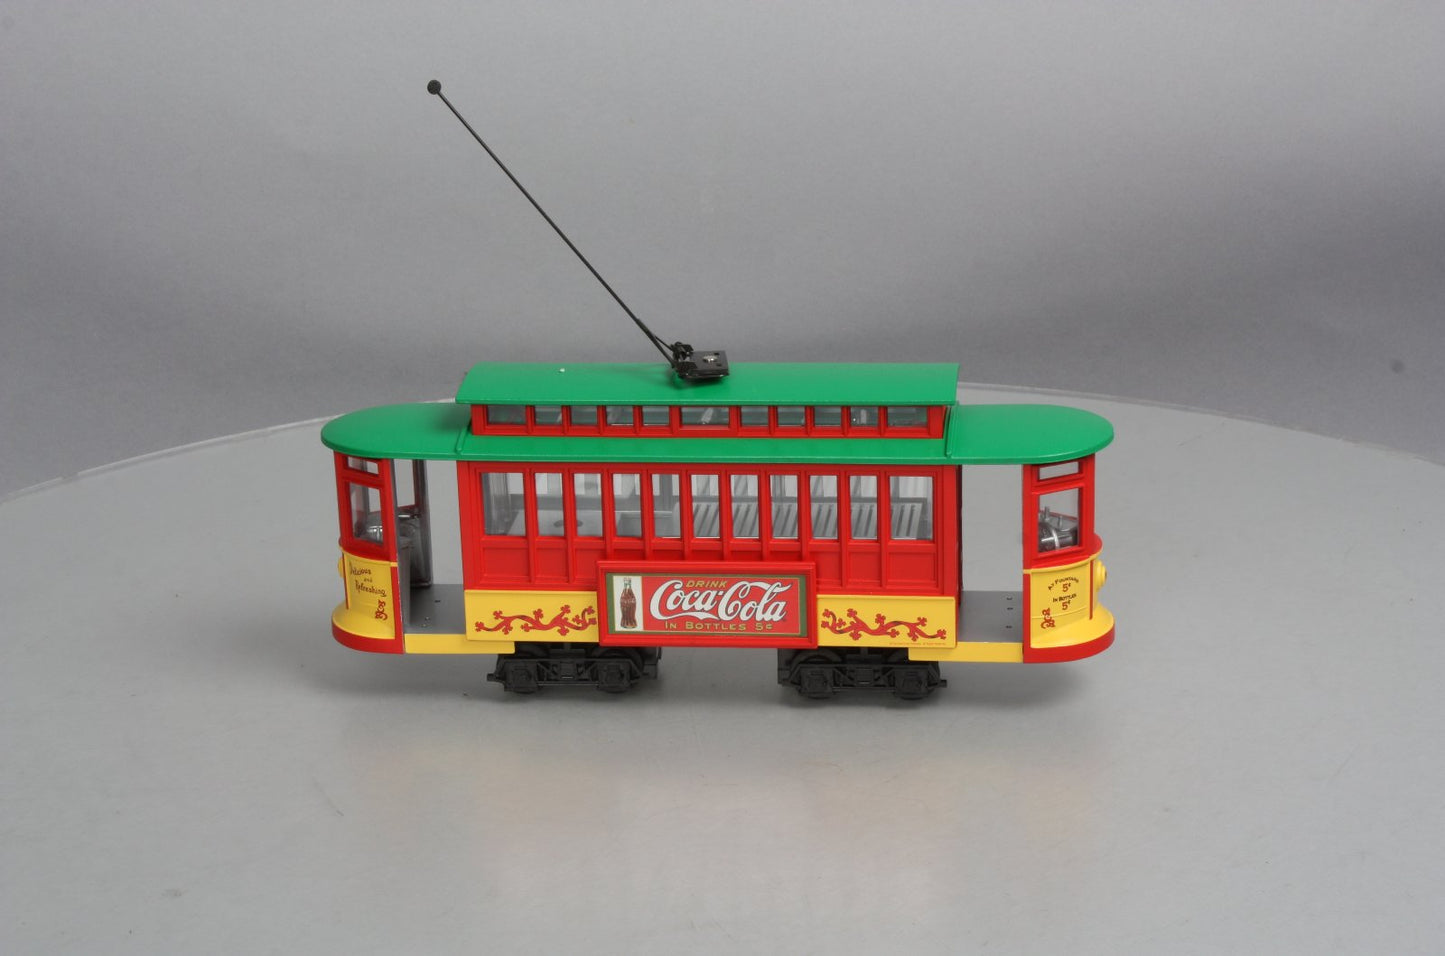 K-Line K2627-06 O Scale Coca-Cola Brand Motorized Trolley LN/Box